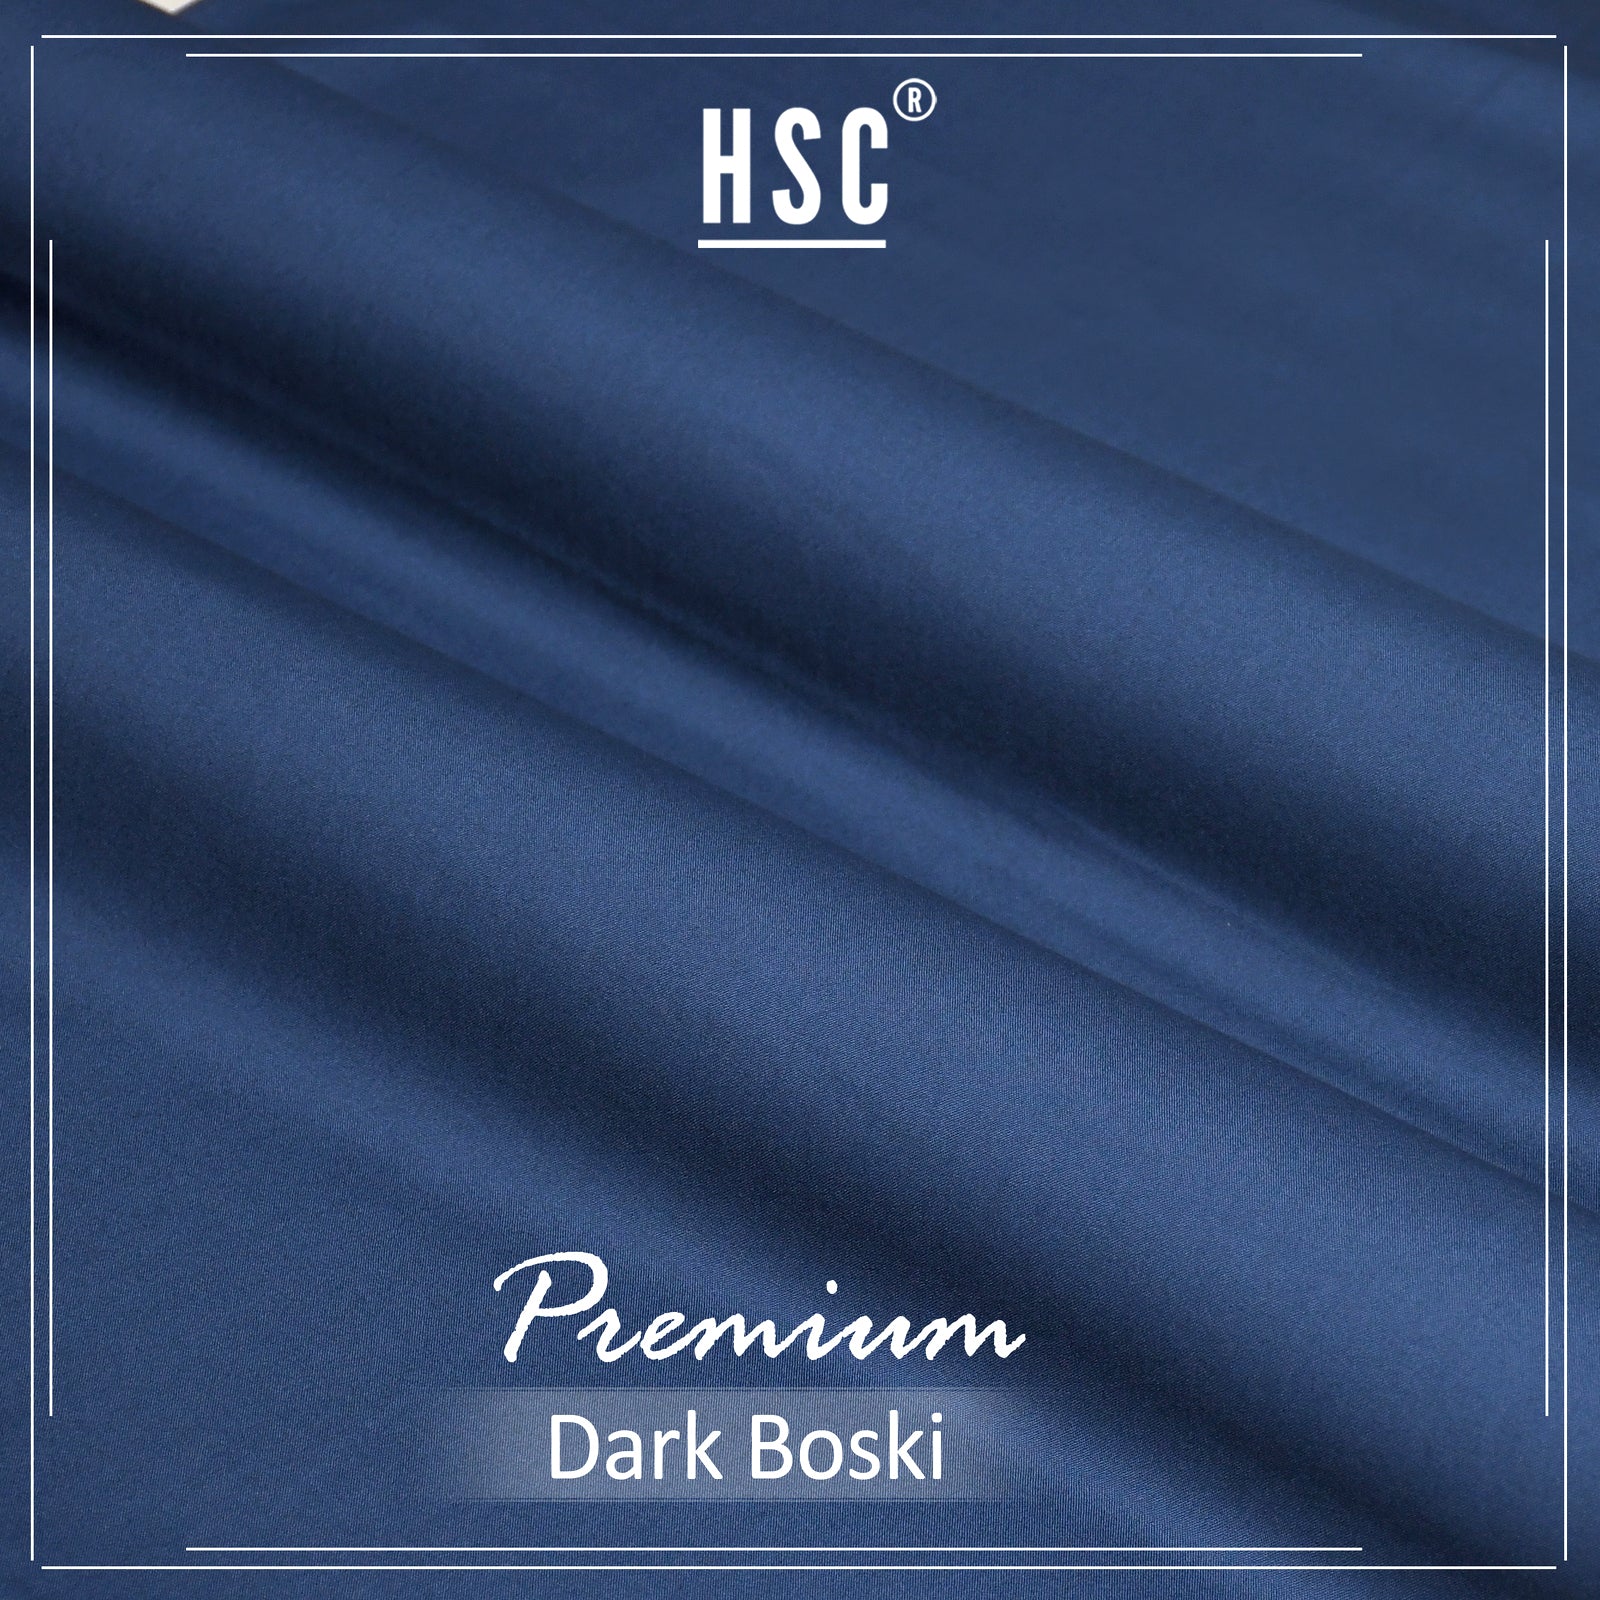 Buy1 Get 1 Free Premium Dark Boski For Men - PDB11 HSC